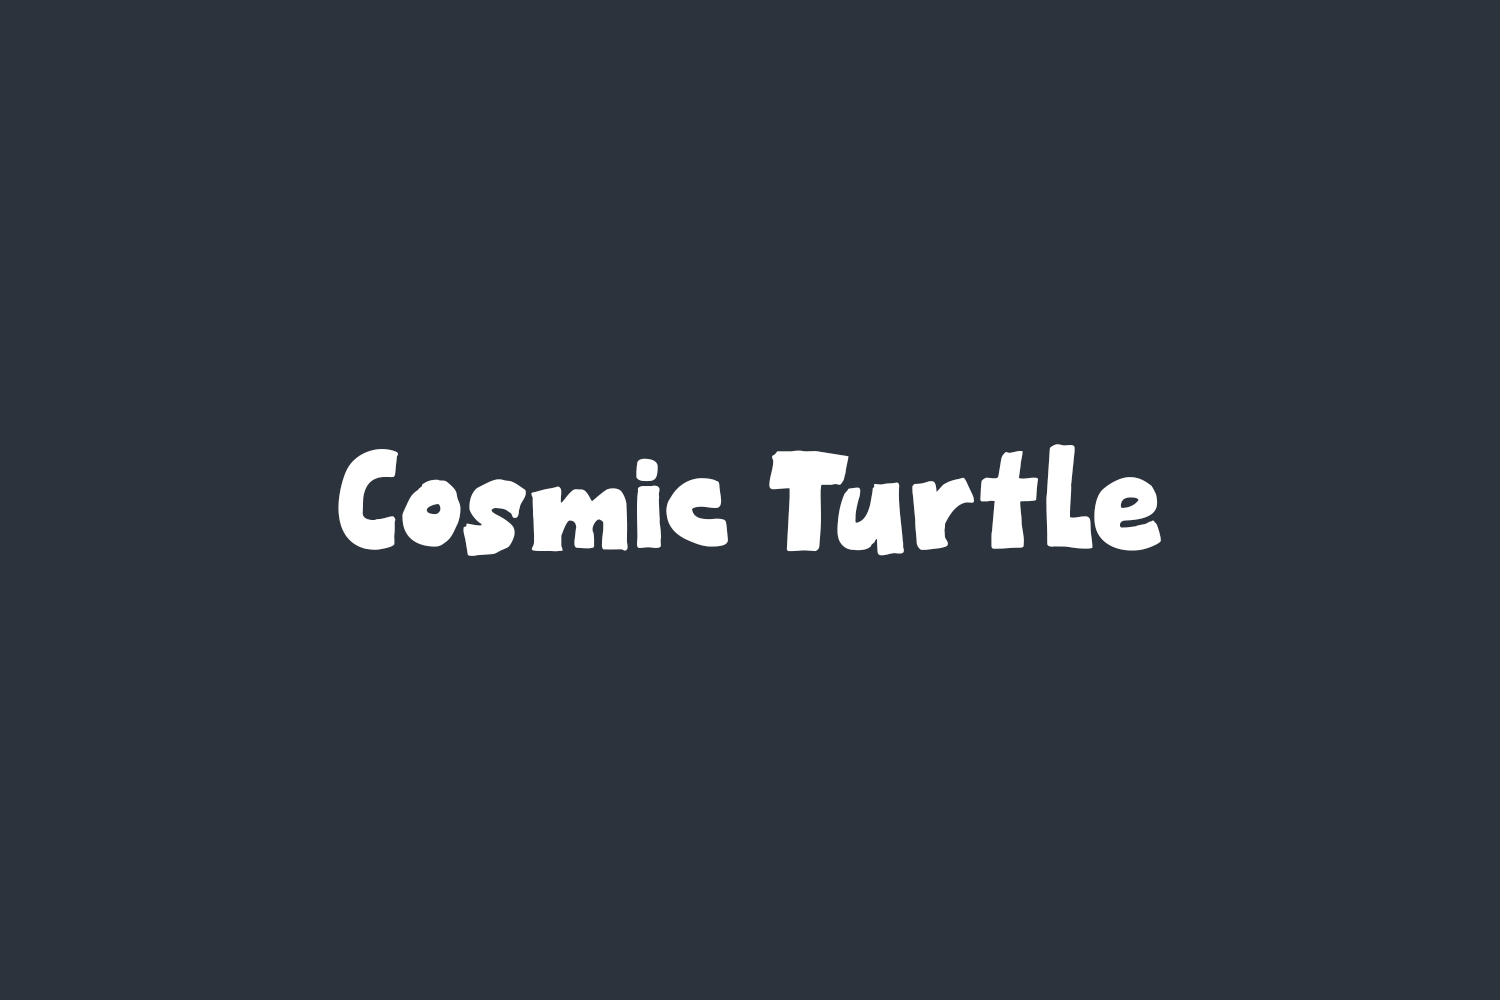 Cosmic Turtle Free Font